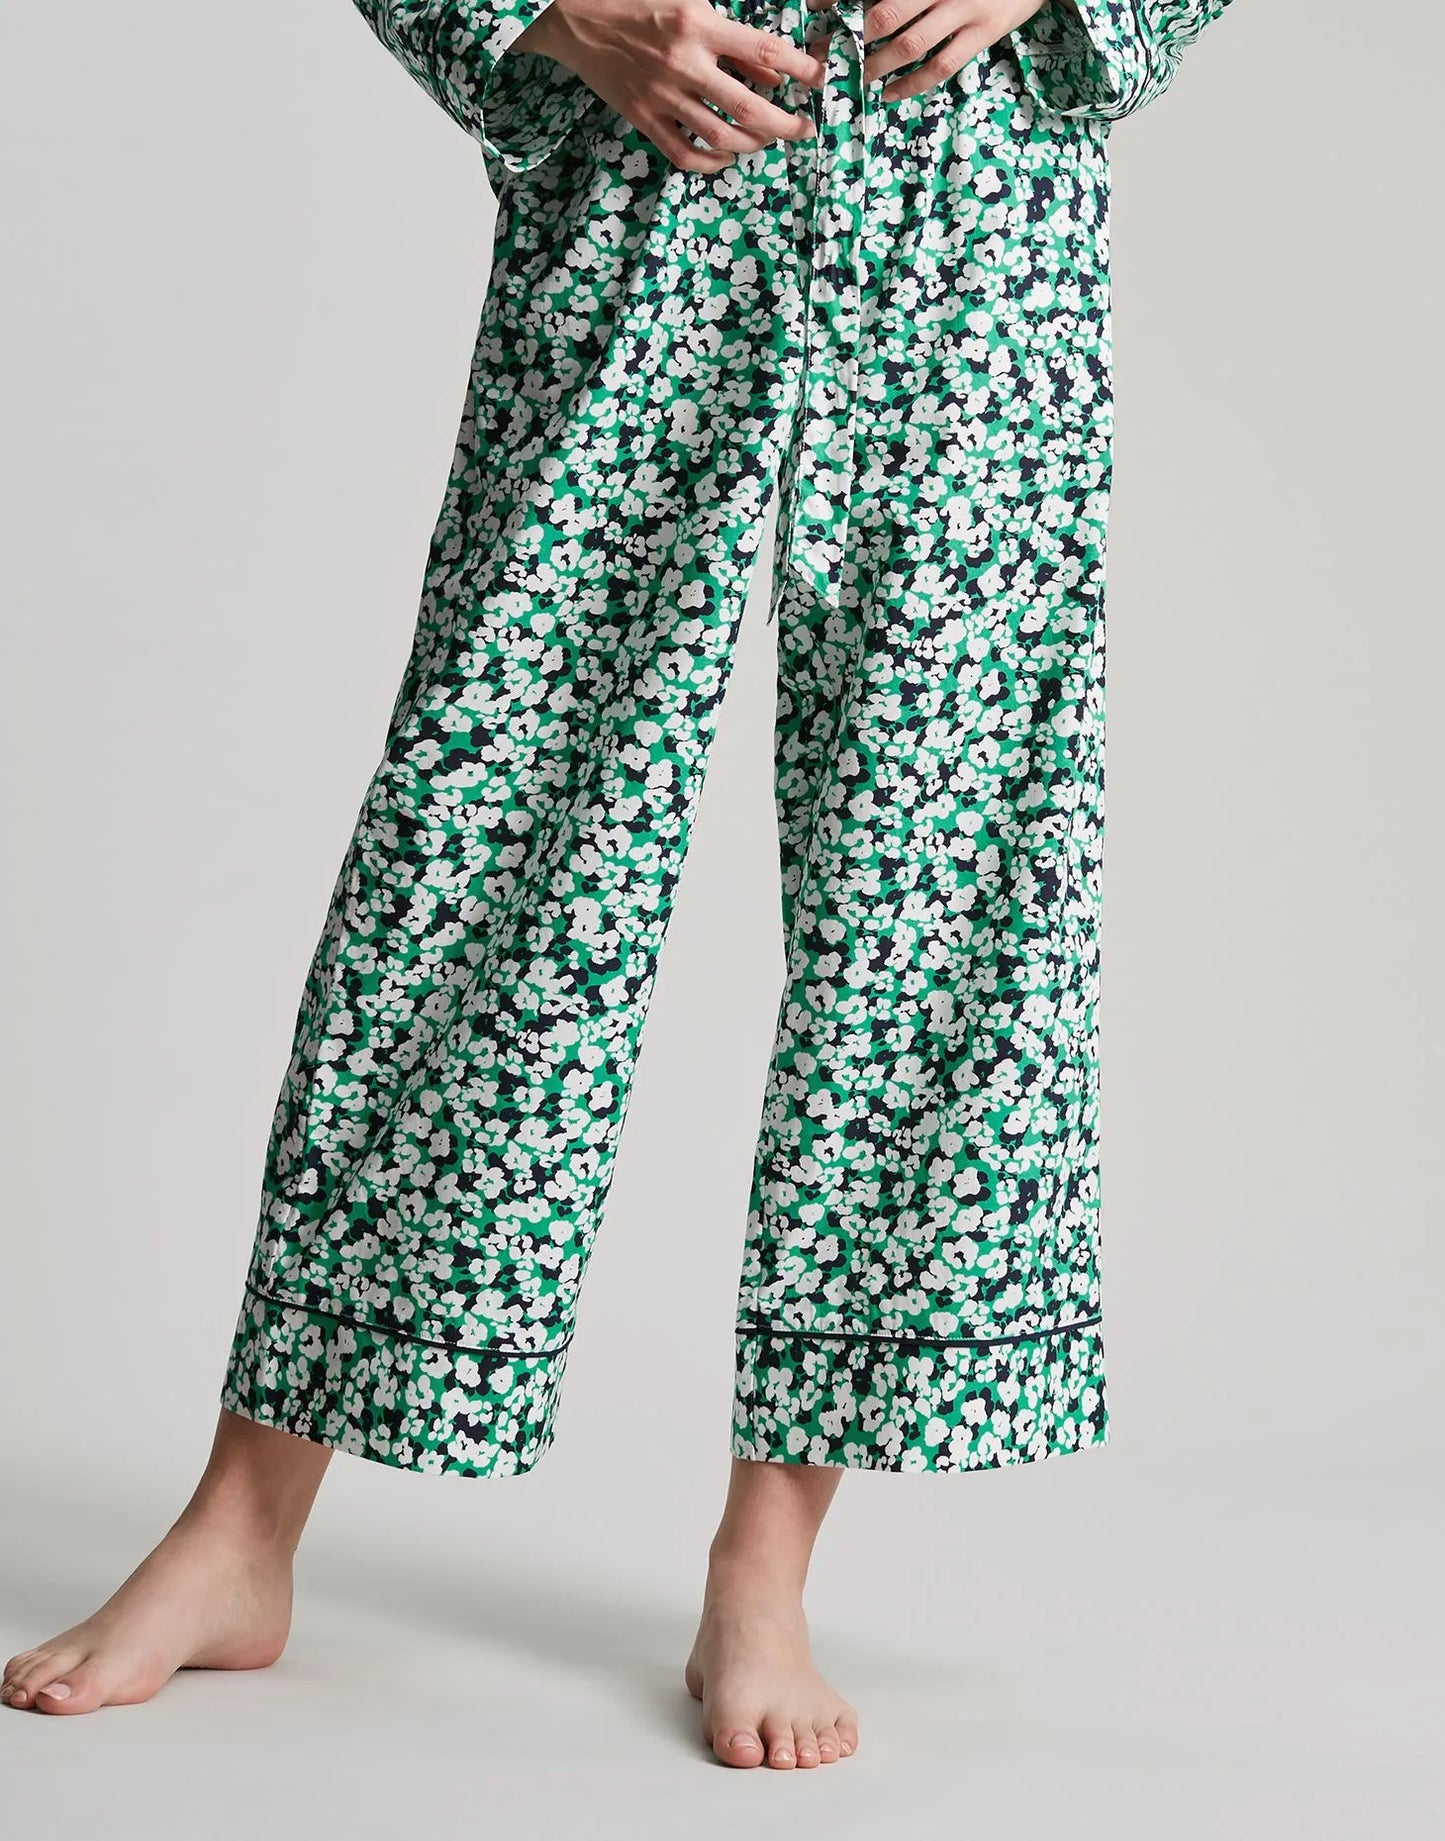 Napwell Pyjama Set - Green Ditsy